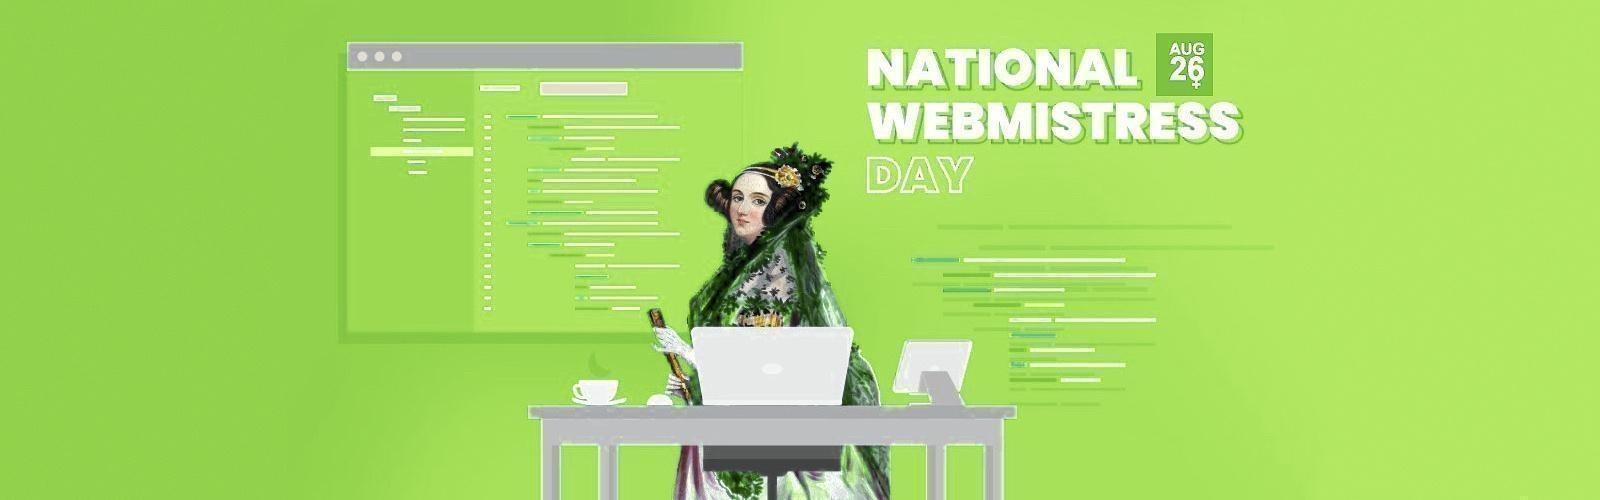 National Webmistress Day